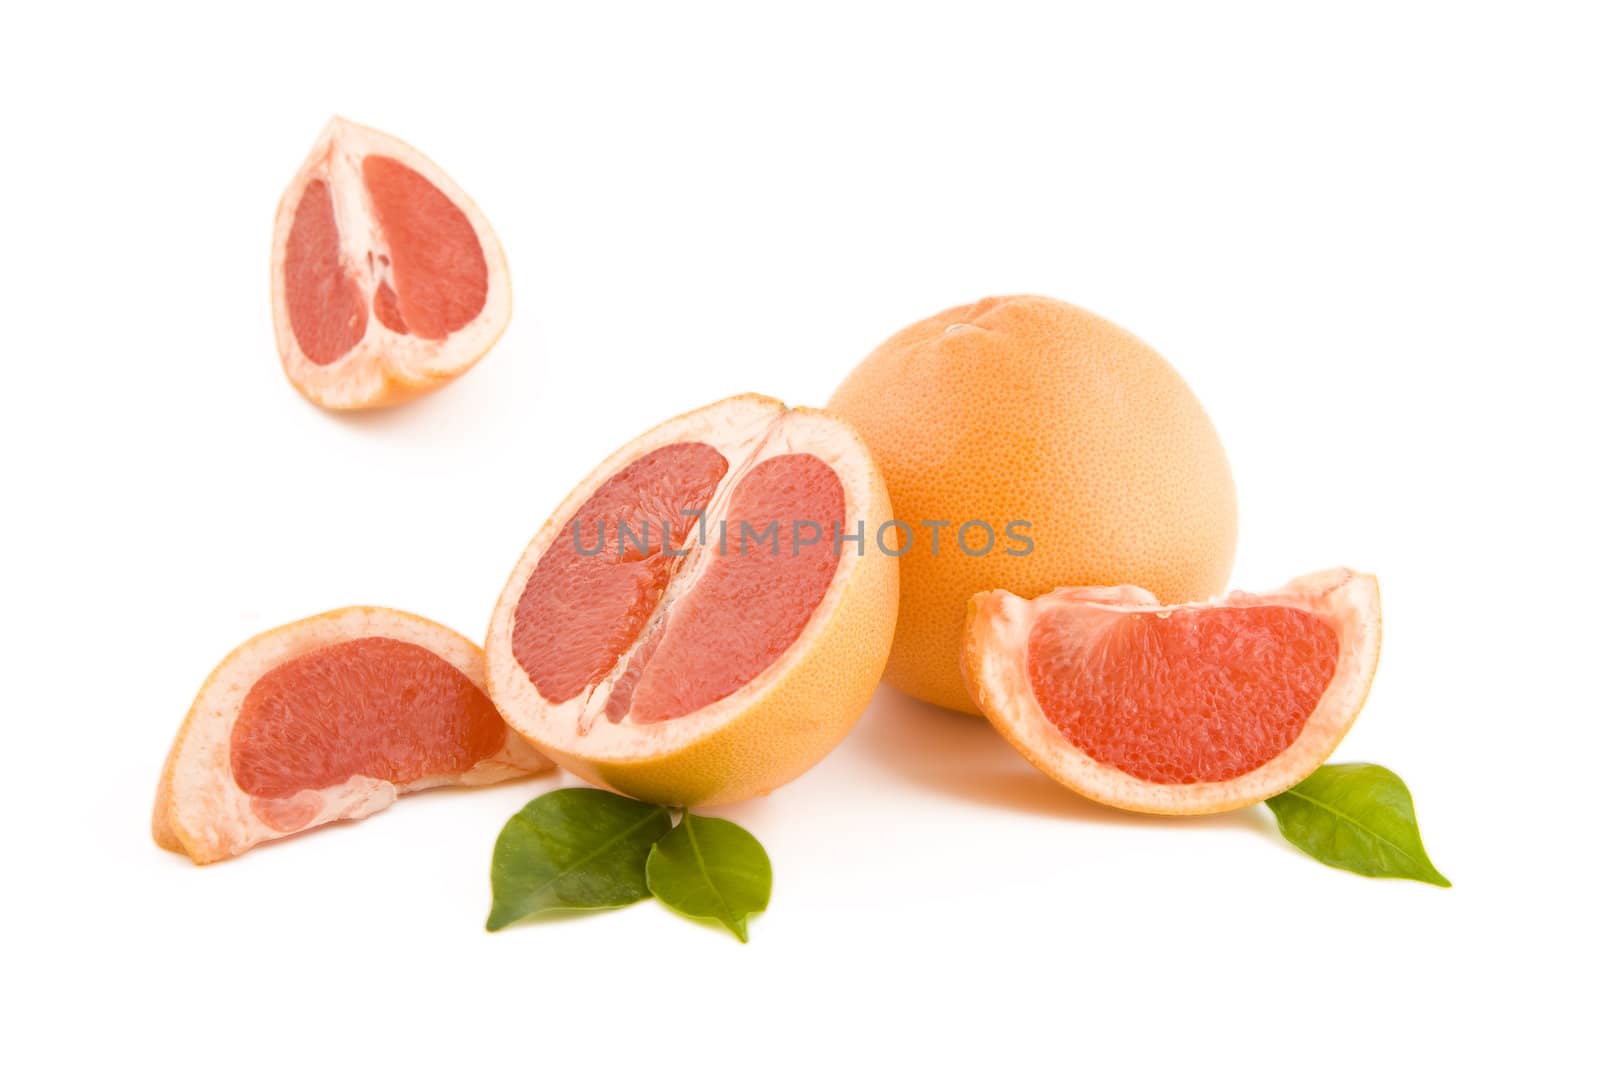 Red grapefruits by Gbuglok